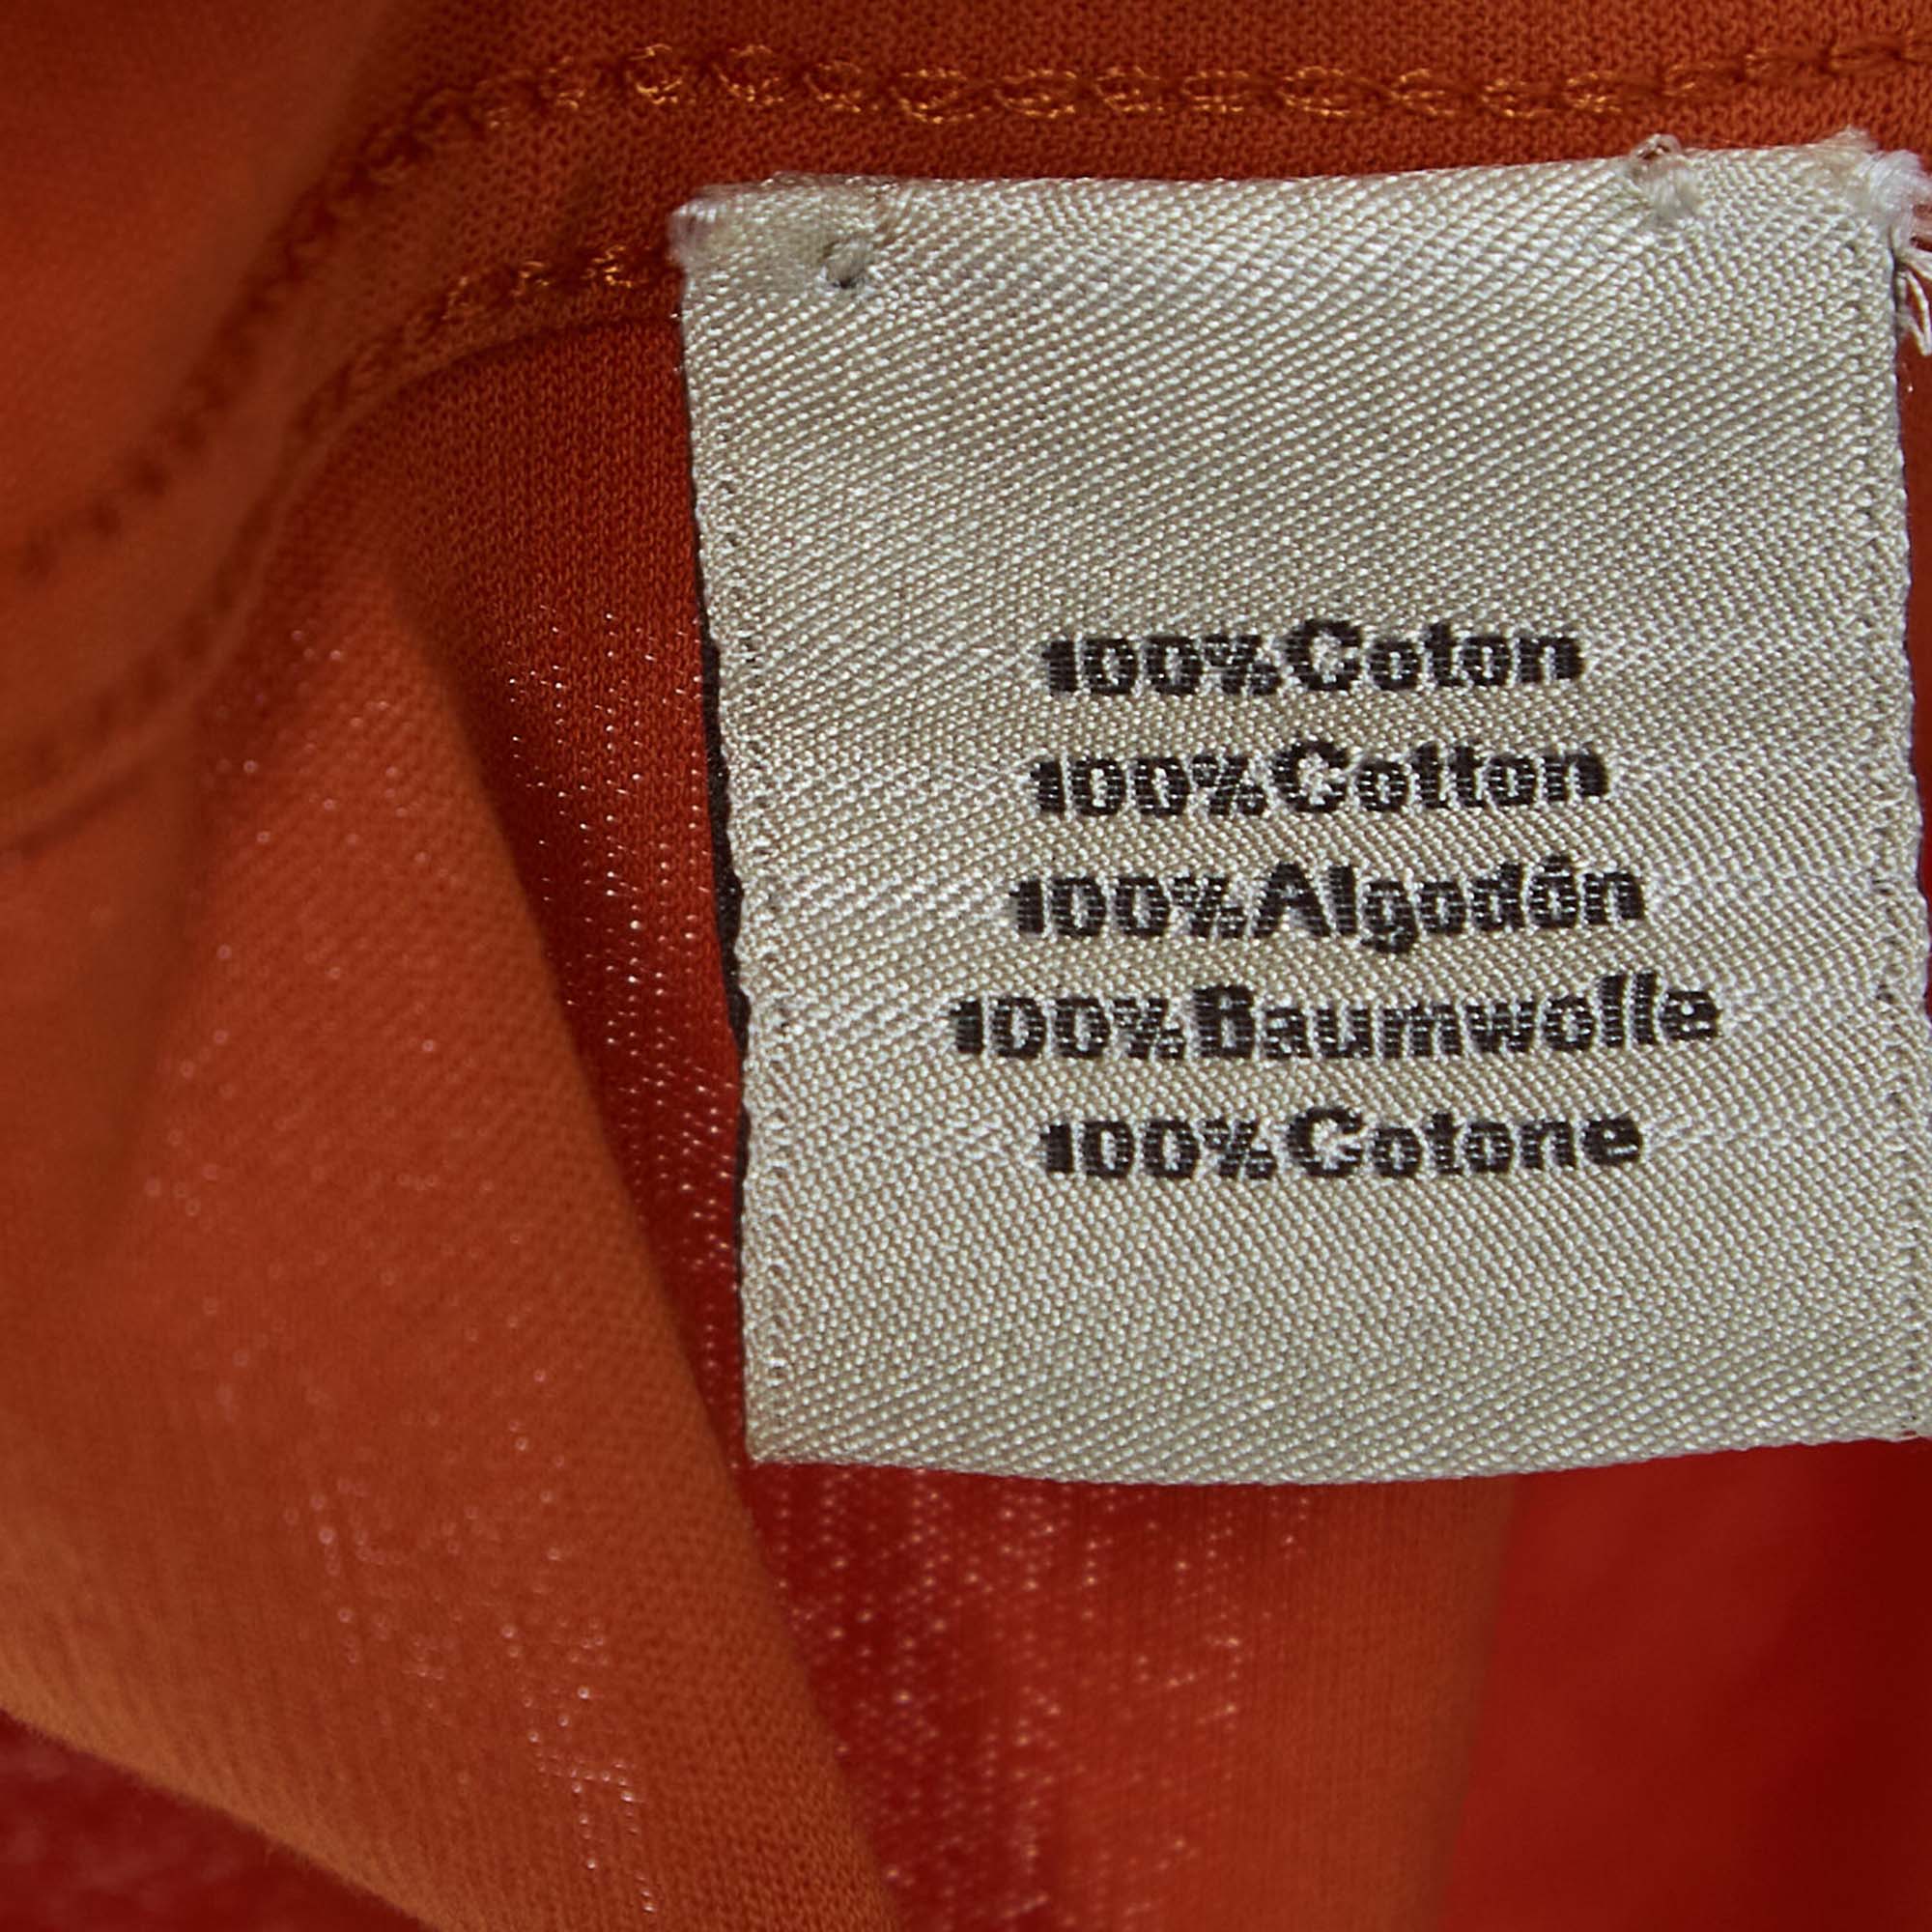 Hermes Orange Cotton Pocket Detail Half Sleeve T-Shirt M